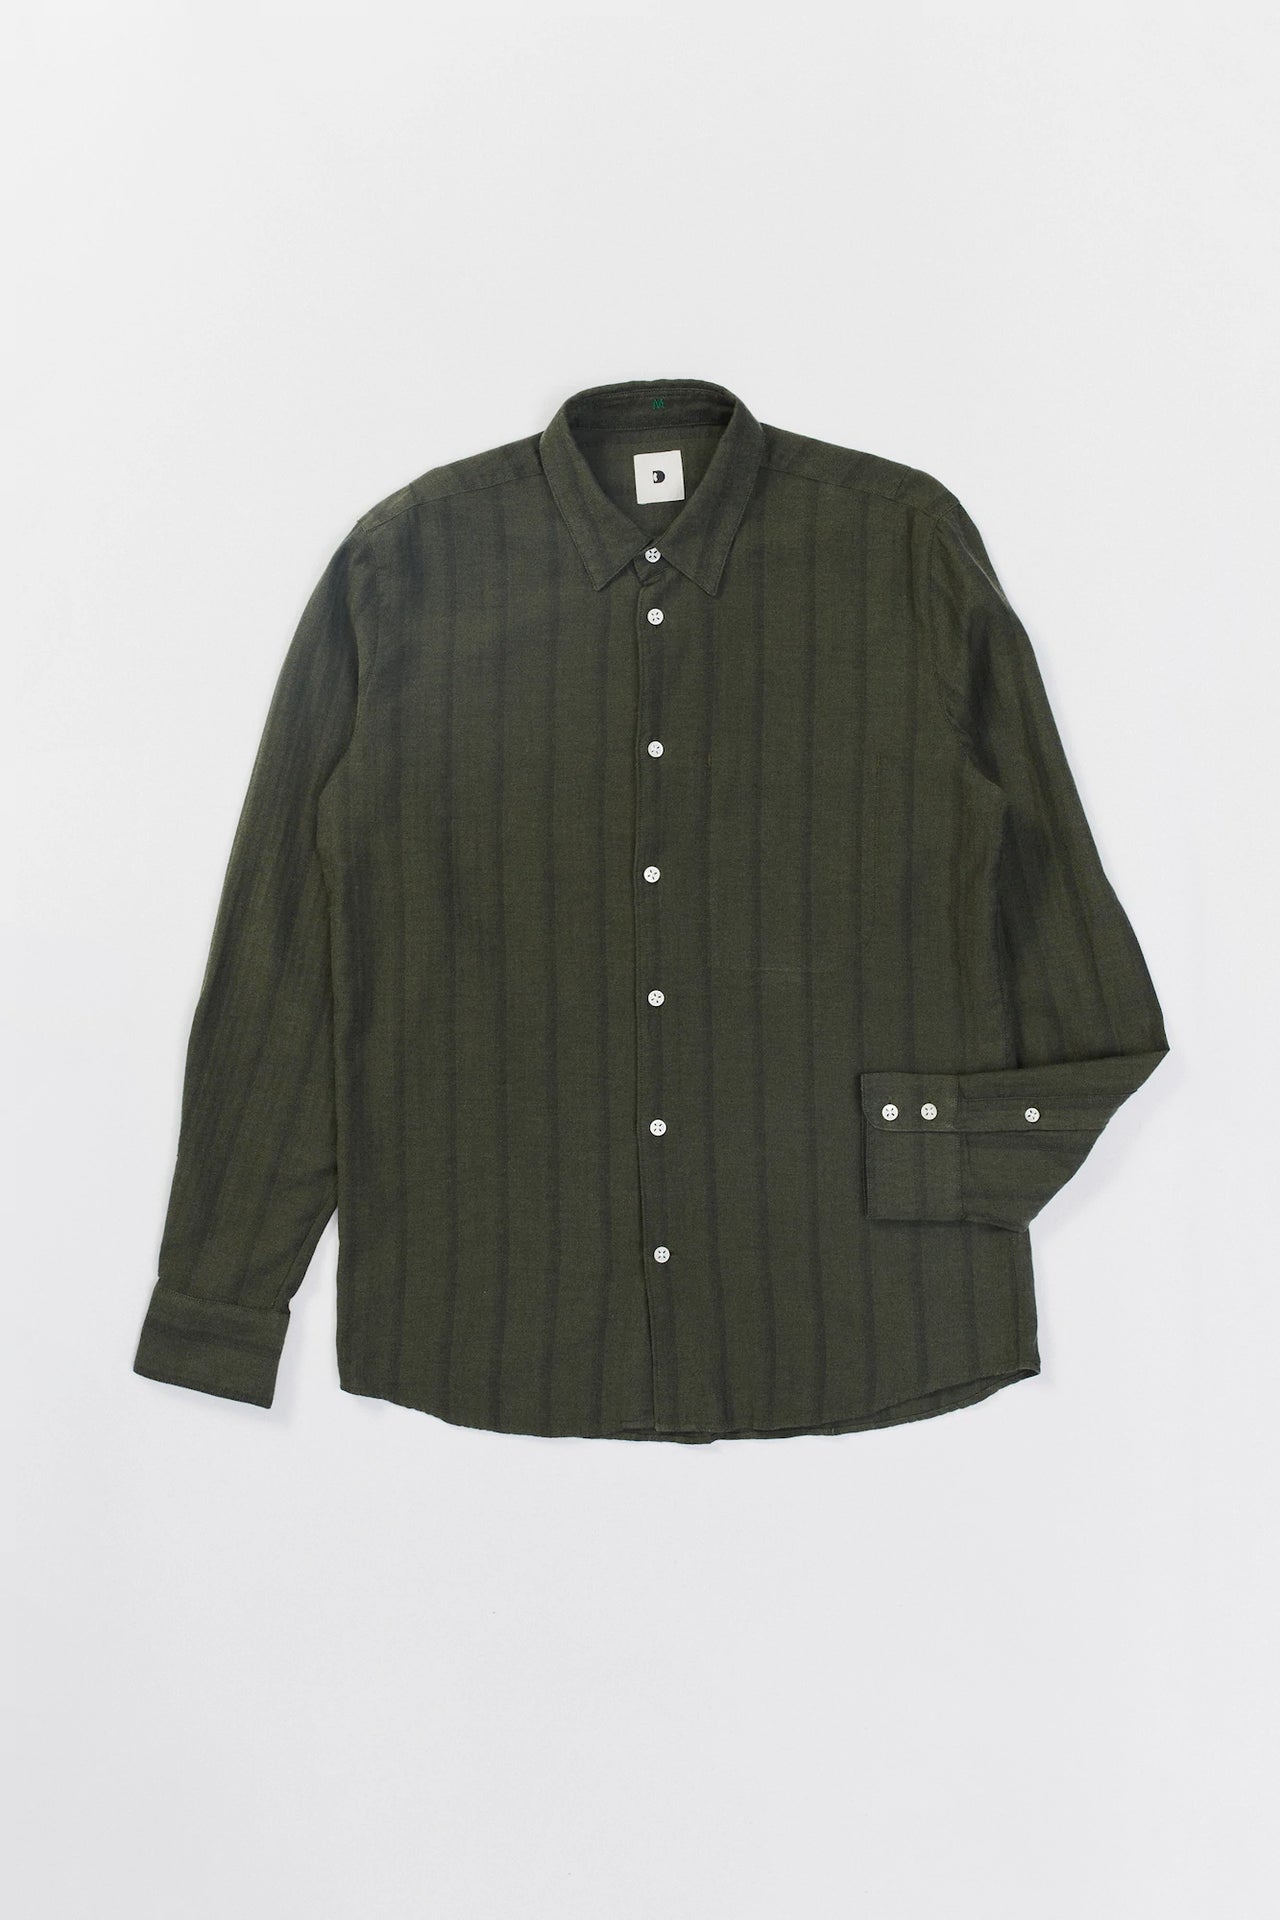 Feel Good Shirt in a Fine and Soft Green Tonal Herringbone Stripe Cotton Flannel